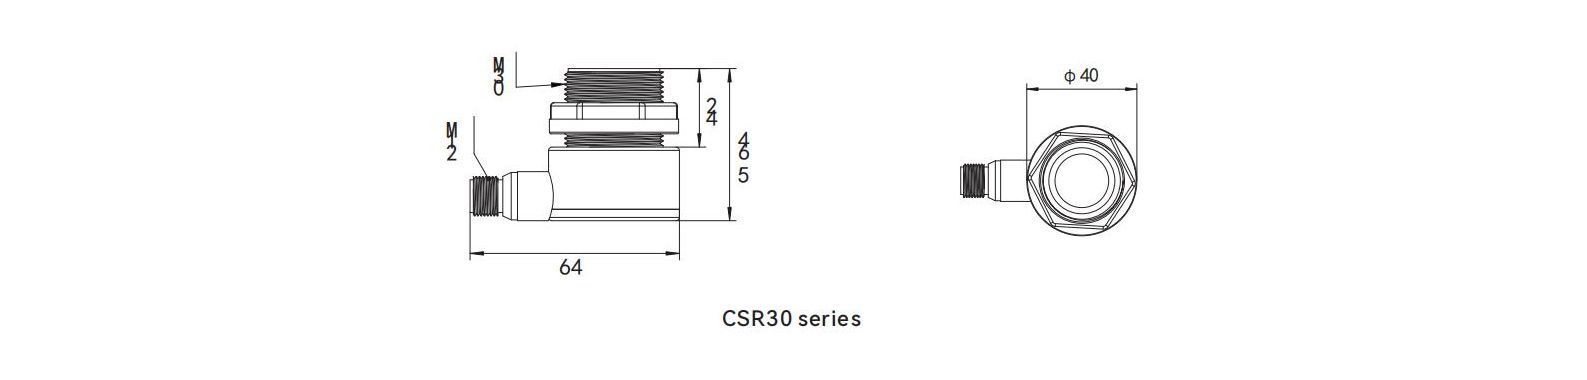 Waterproof Ultrasonic Sensor CSR30 Series Dimensions